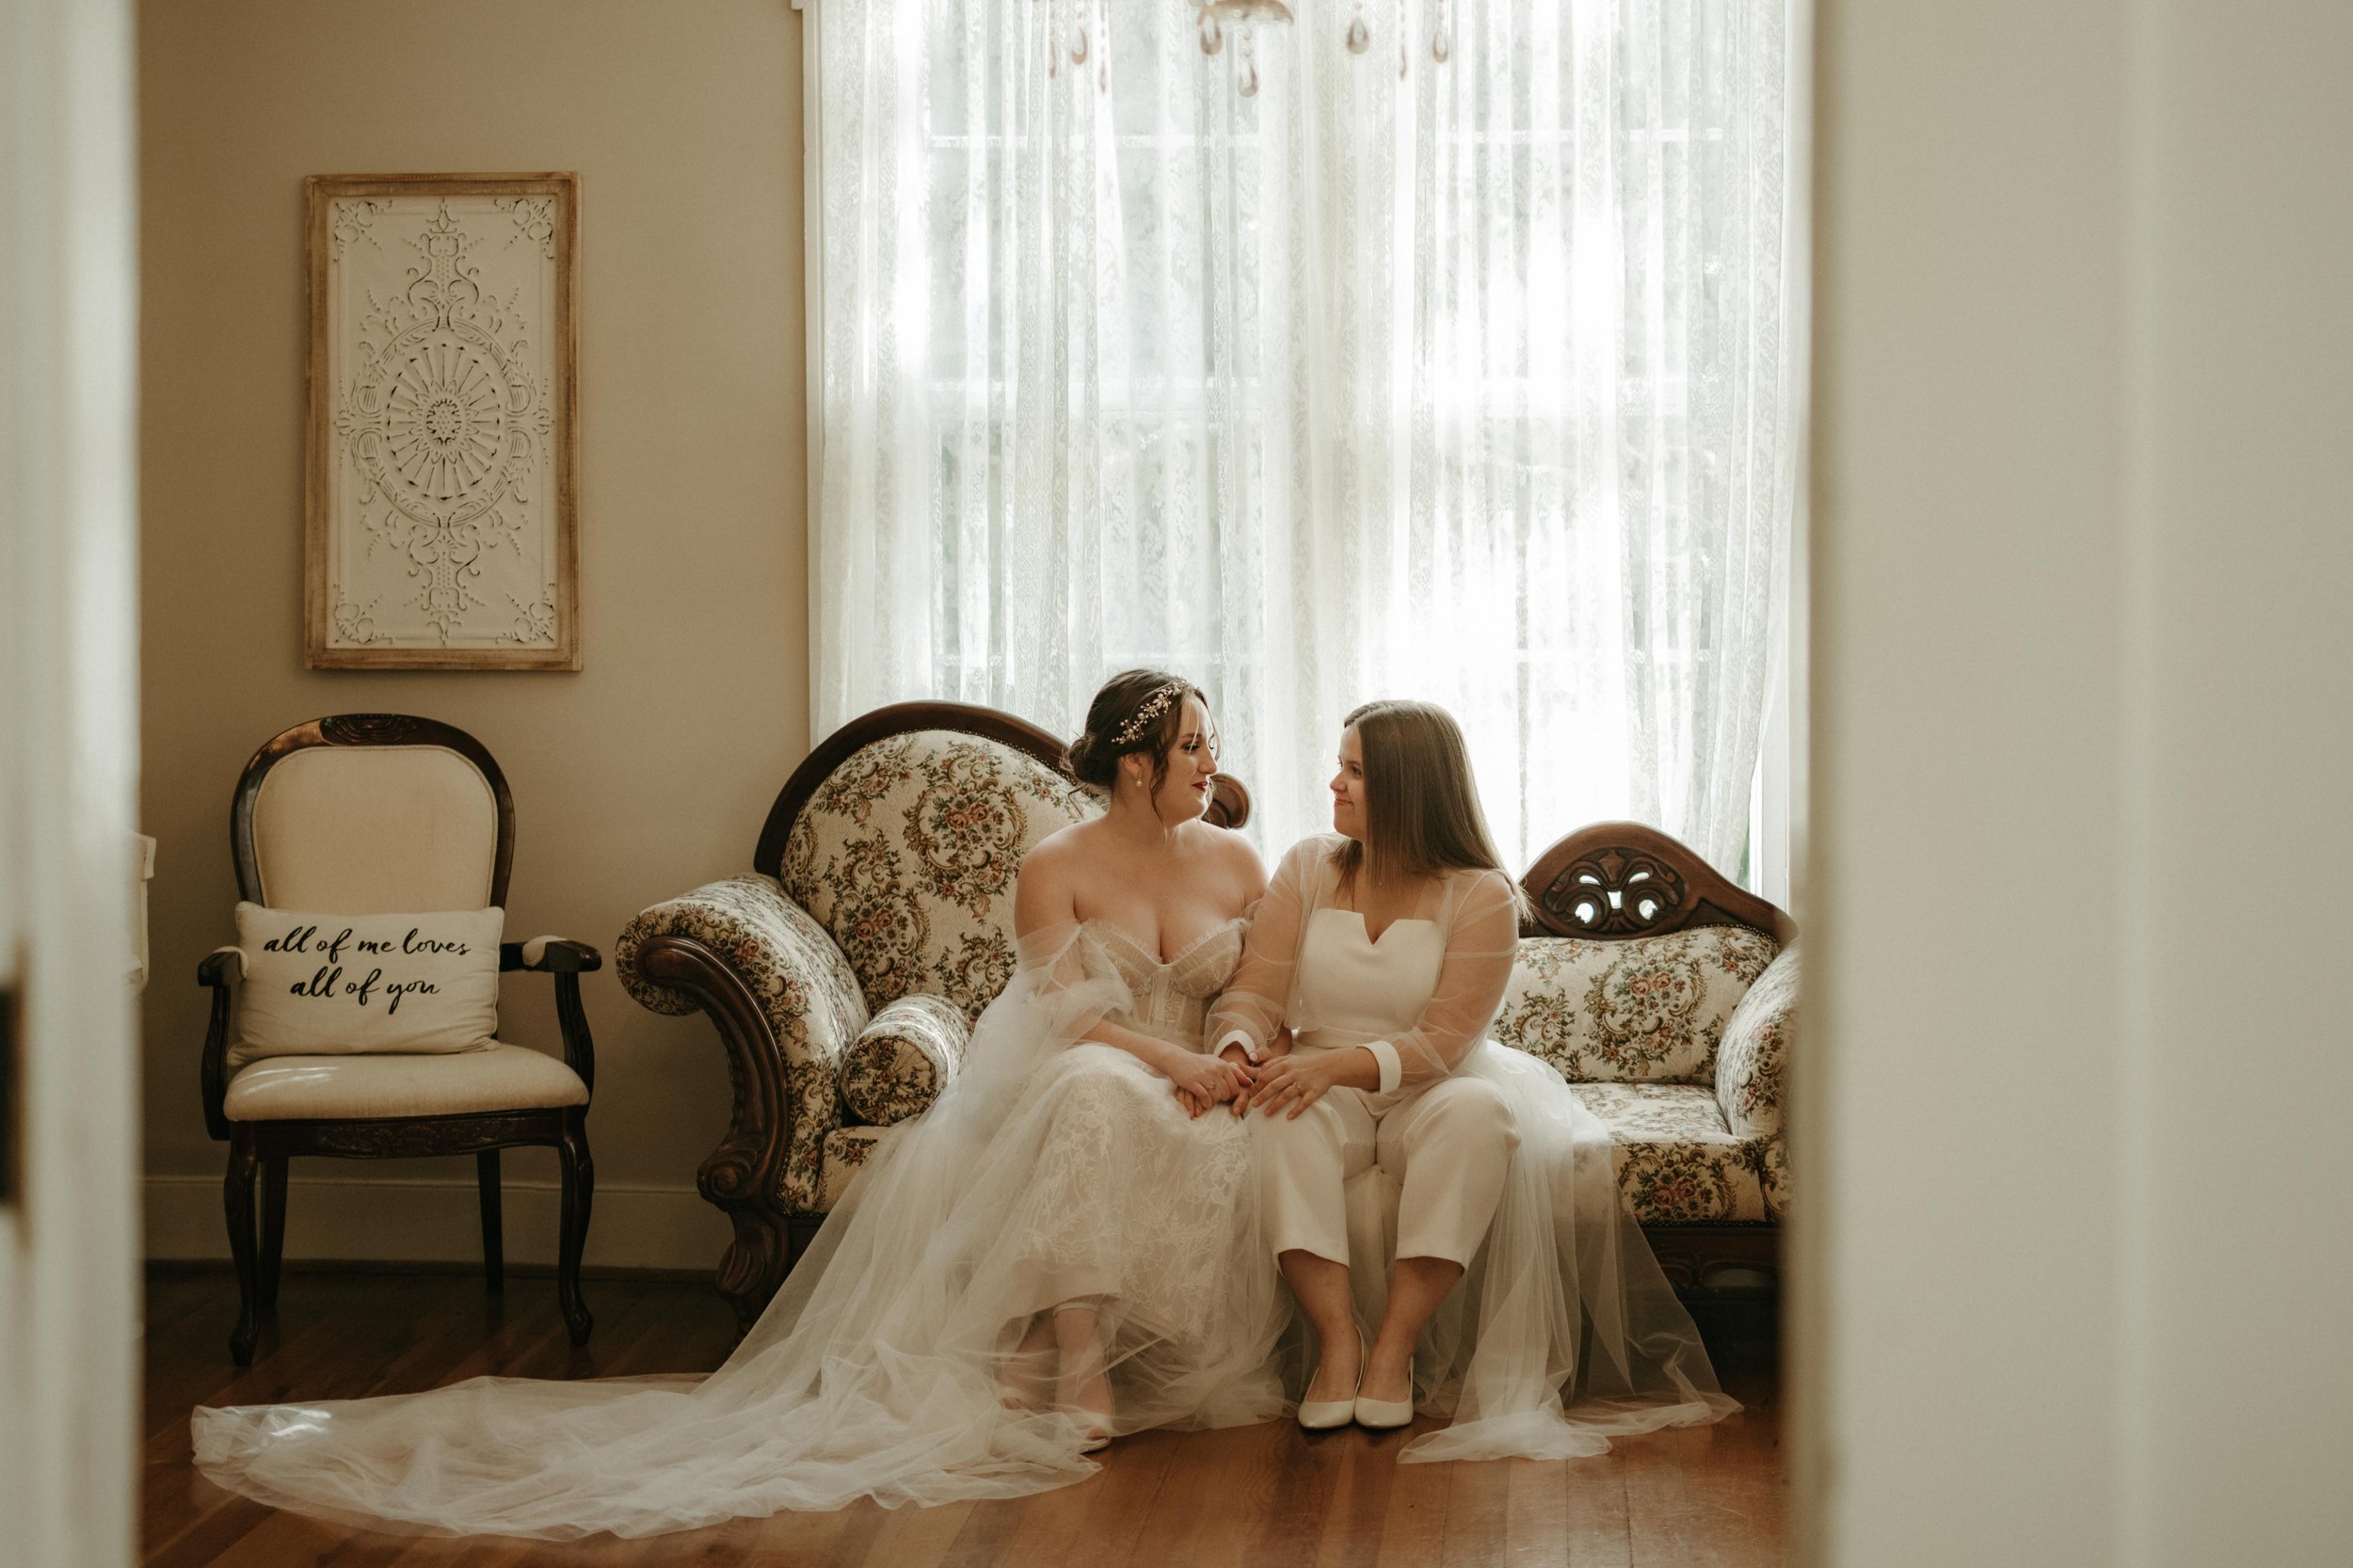 Kadi and Hannah | Intimate Fall Elopement | Nashville, Tennessee